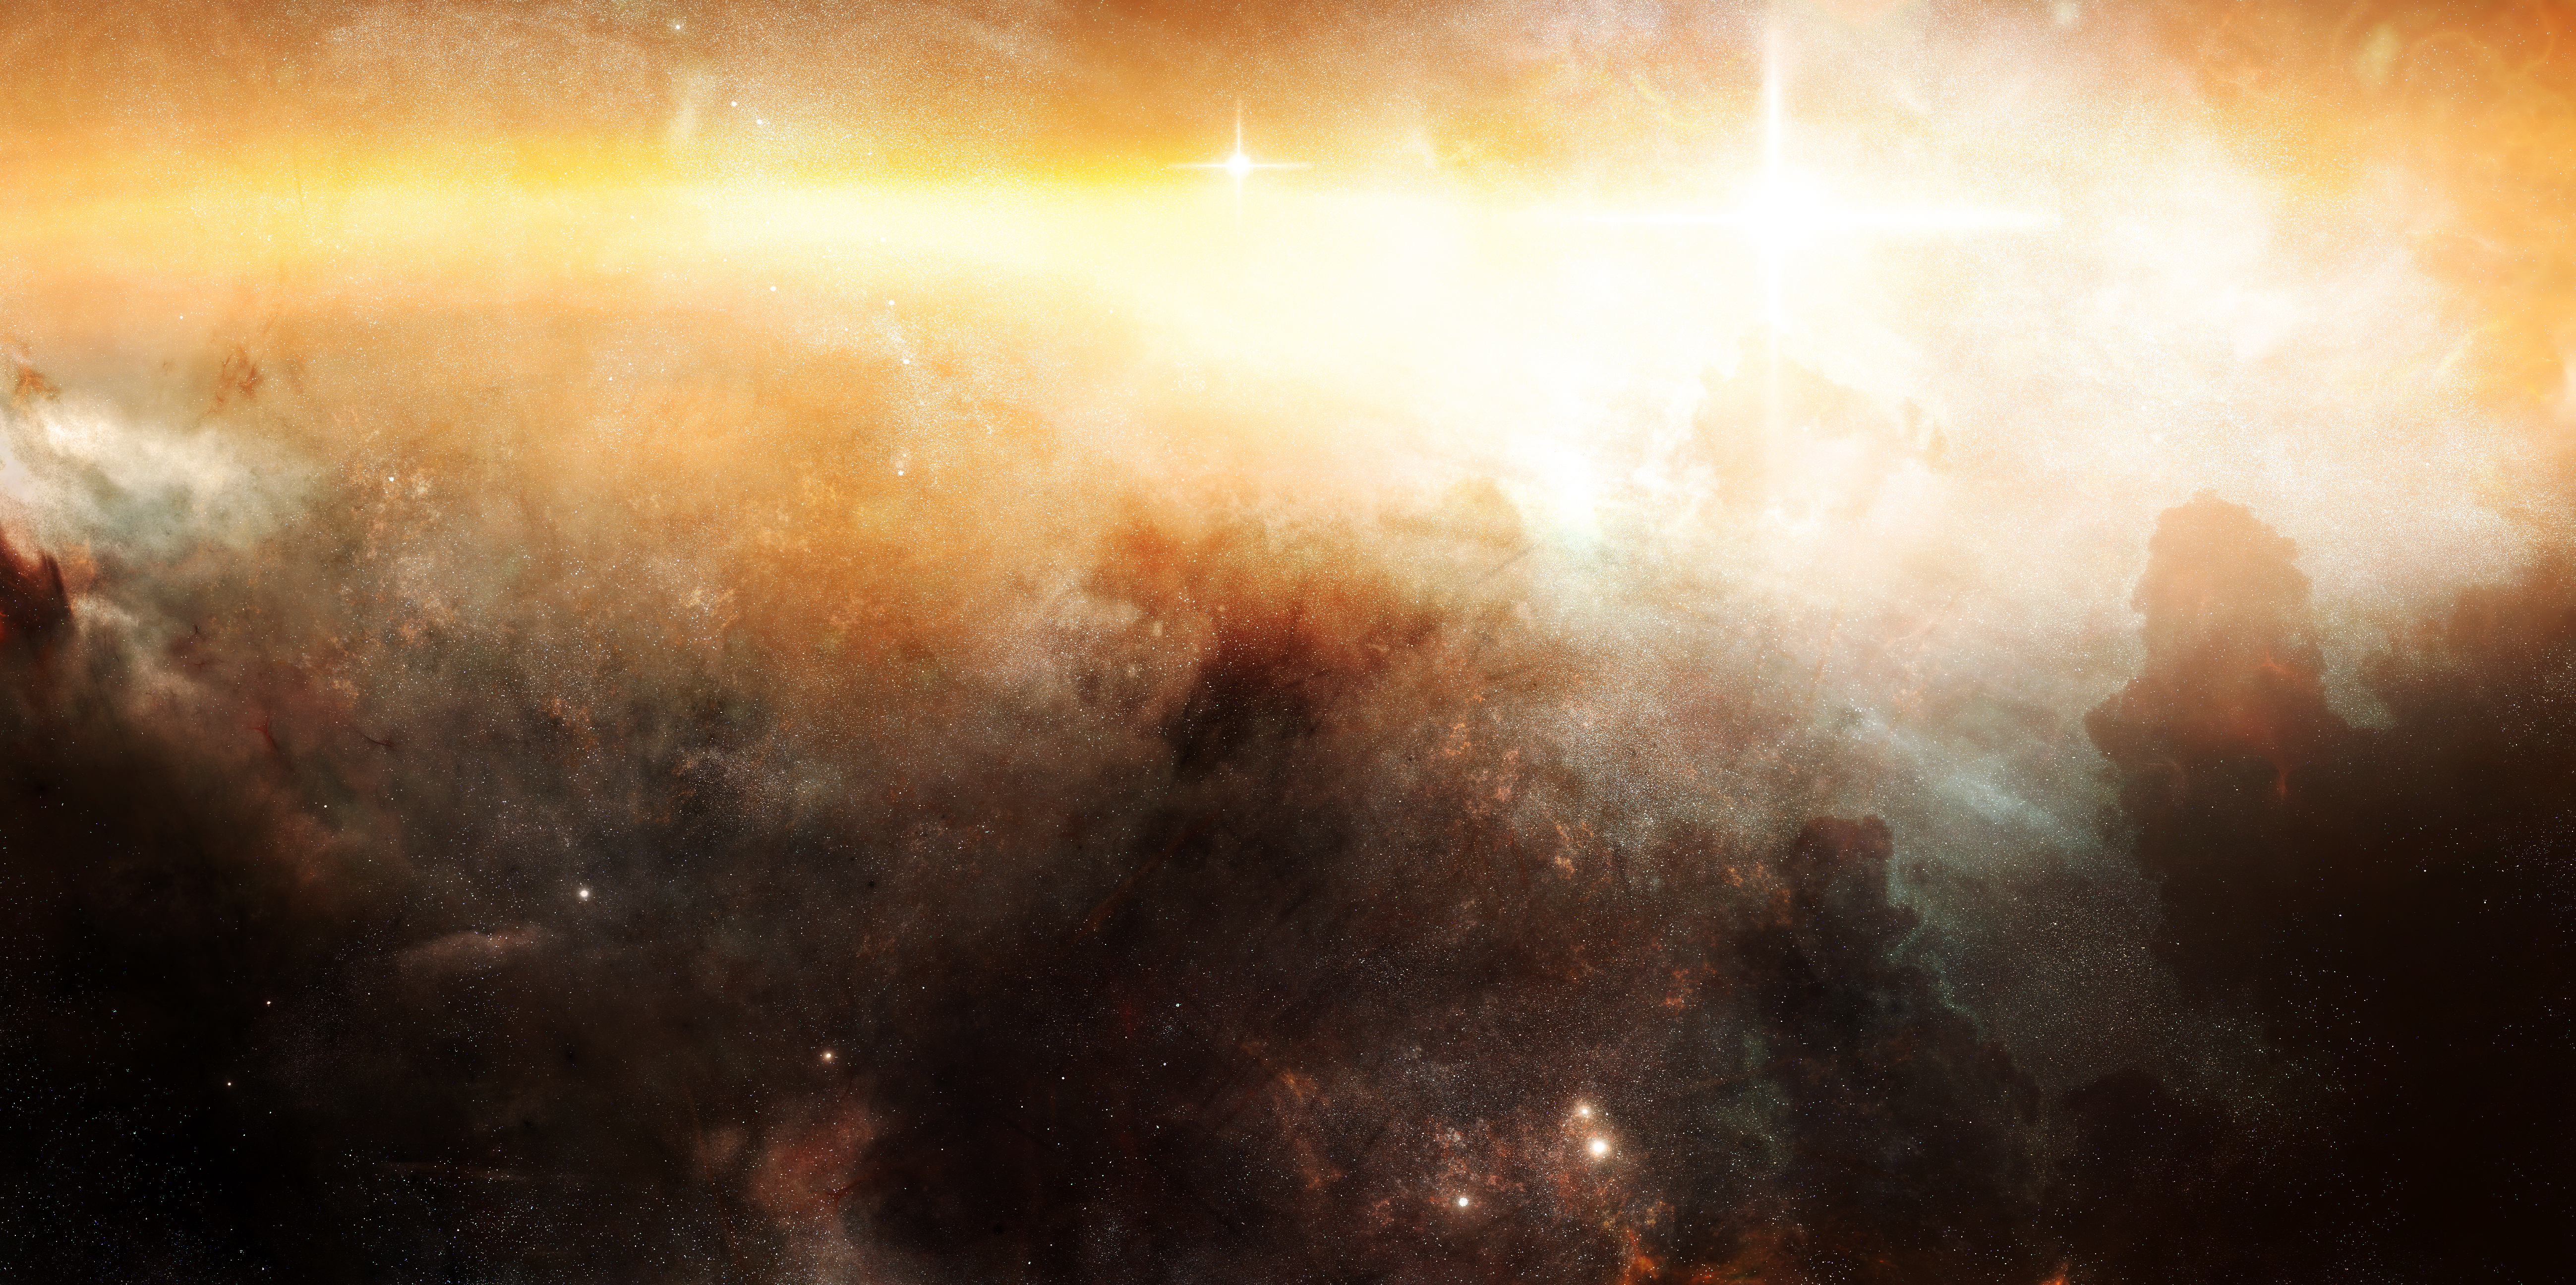 4k Wallpaper Space Nebula Star Cluster Interstellar Gas